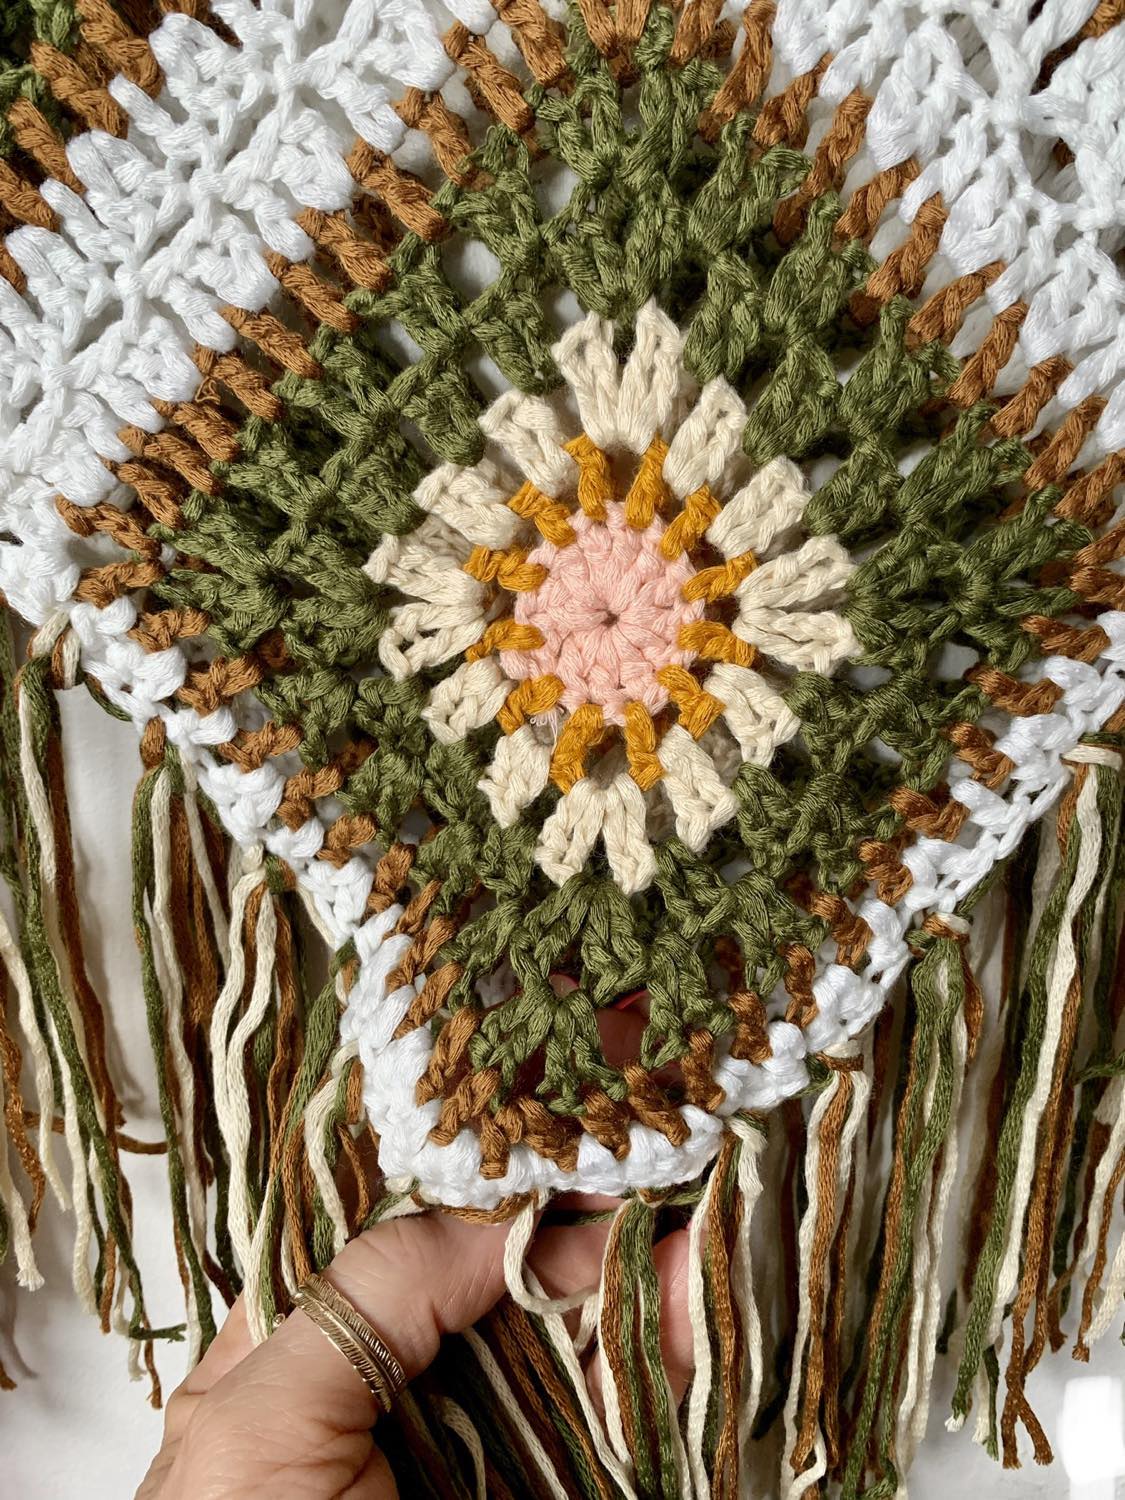 Colourful Crochet Fringe Top